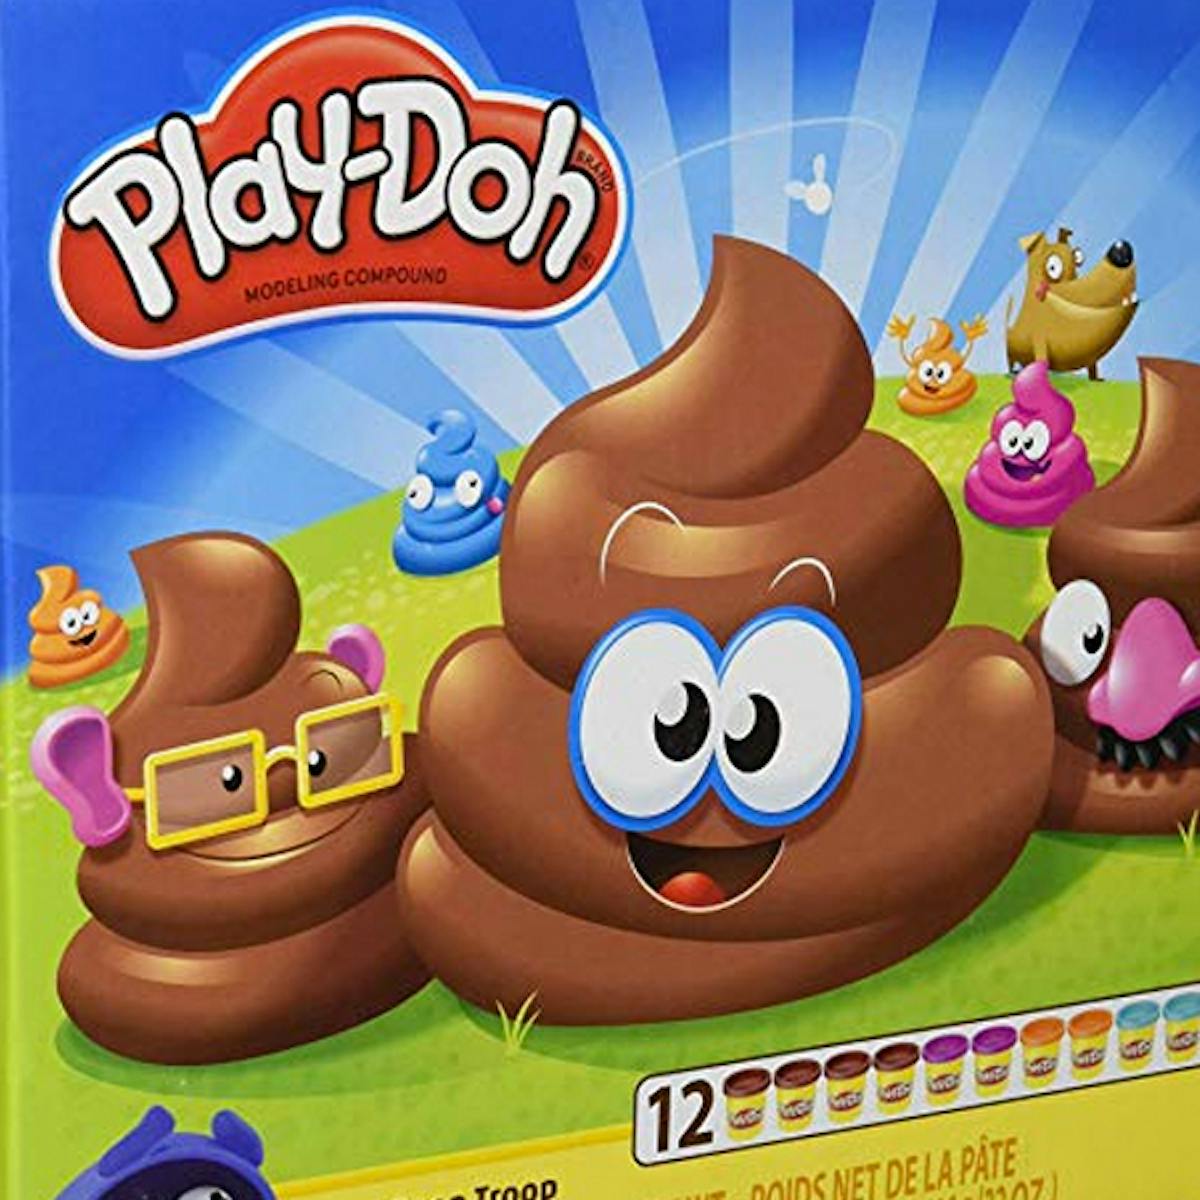 Play-Doh – Pâte à modeler - La chocolaterie